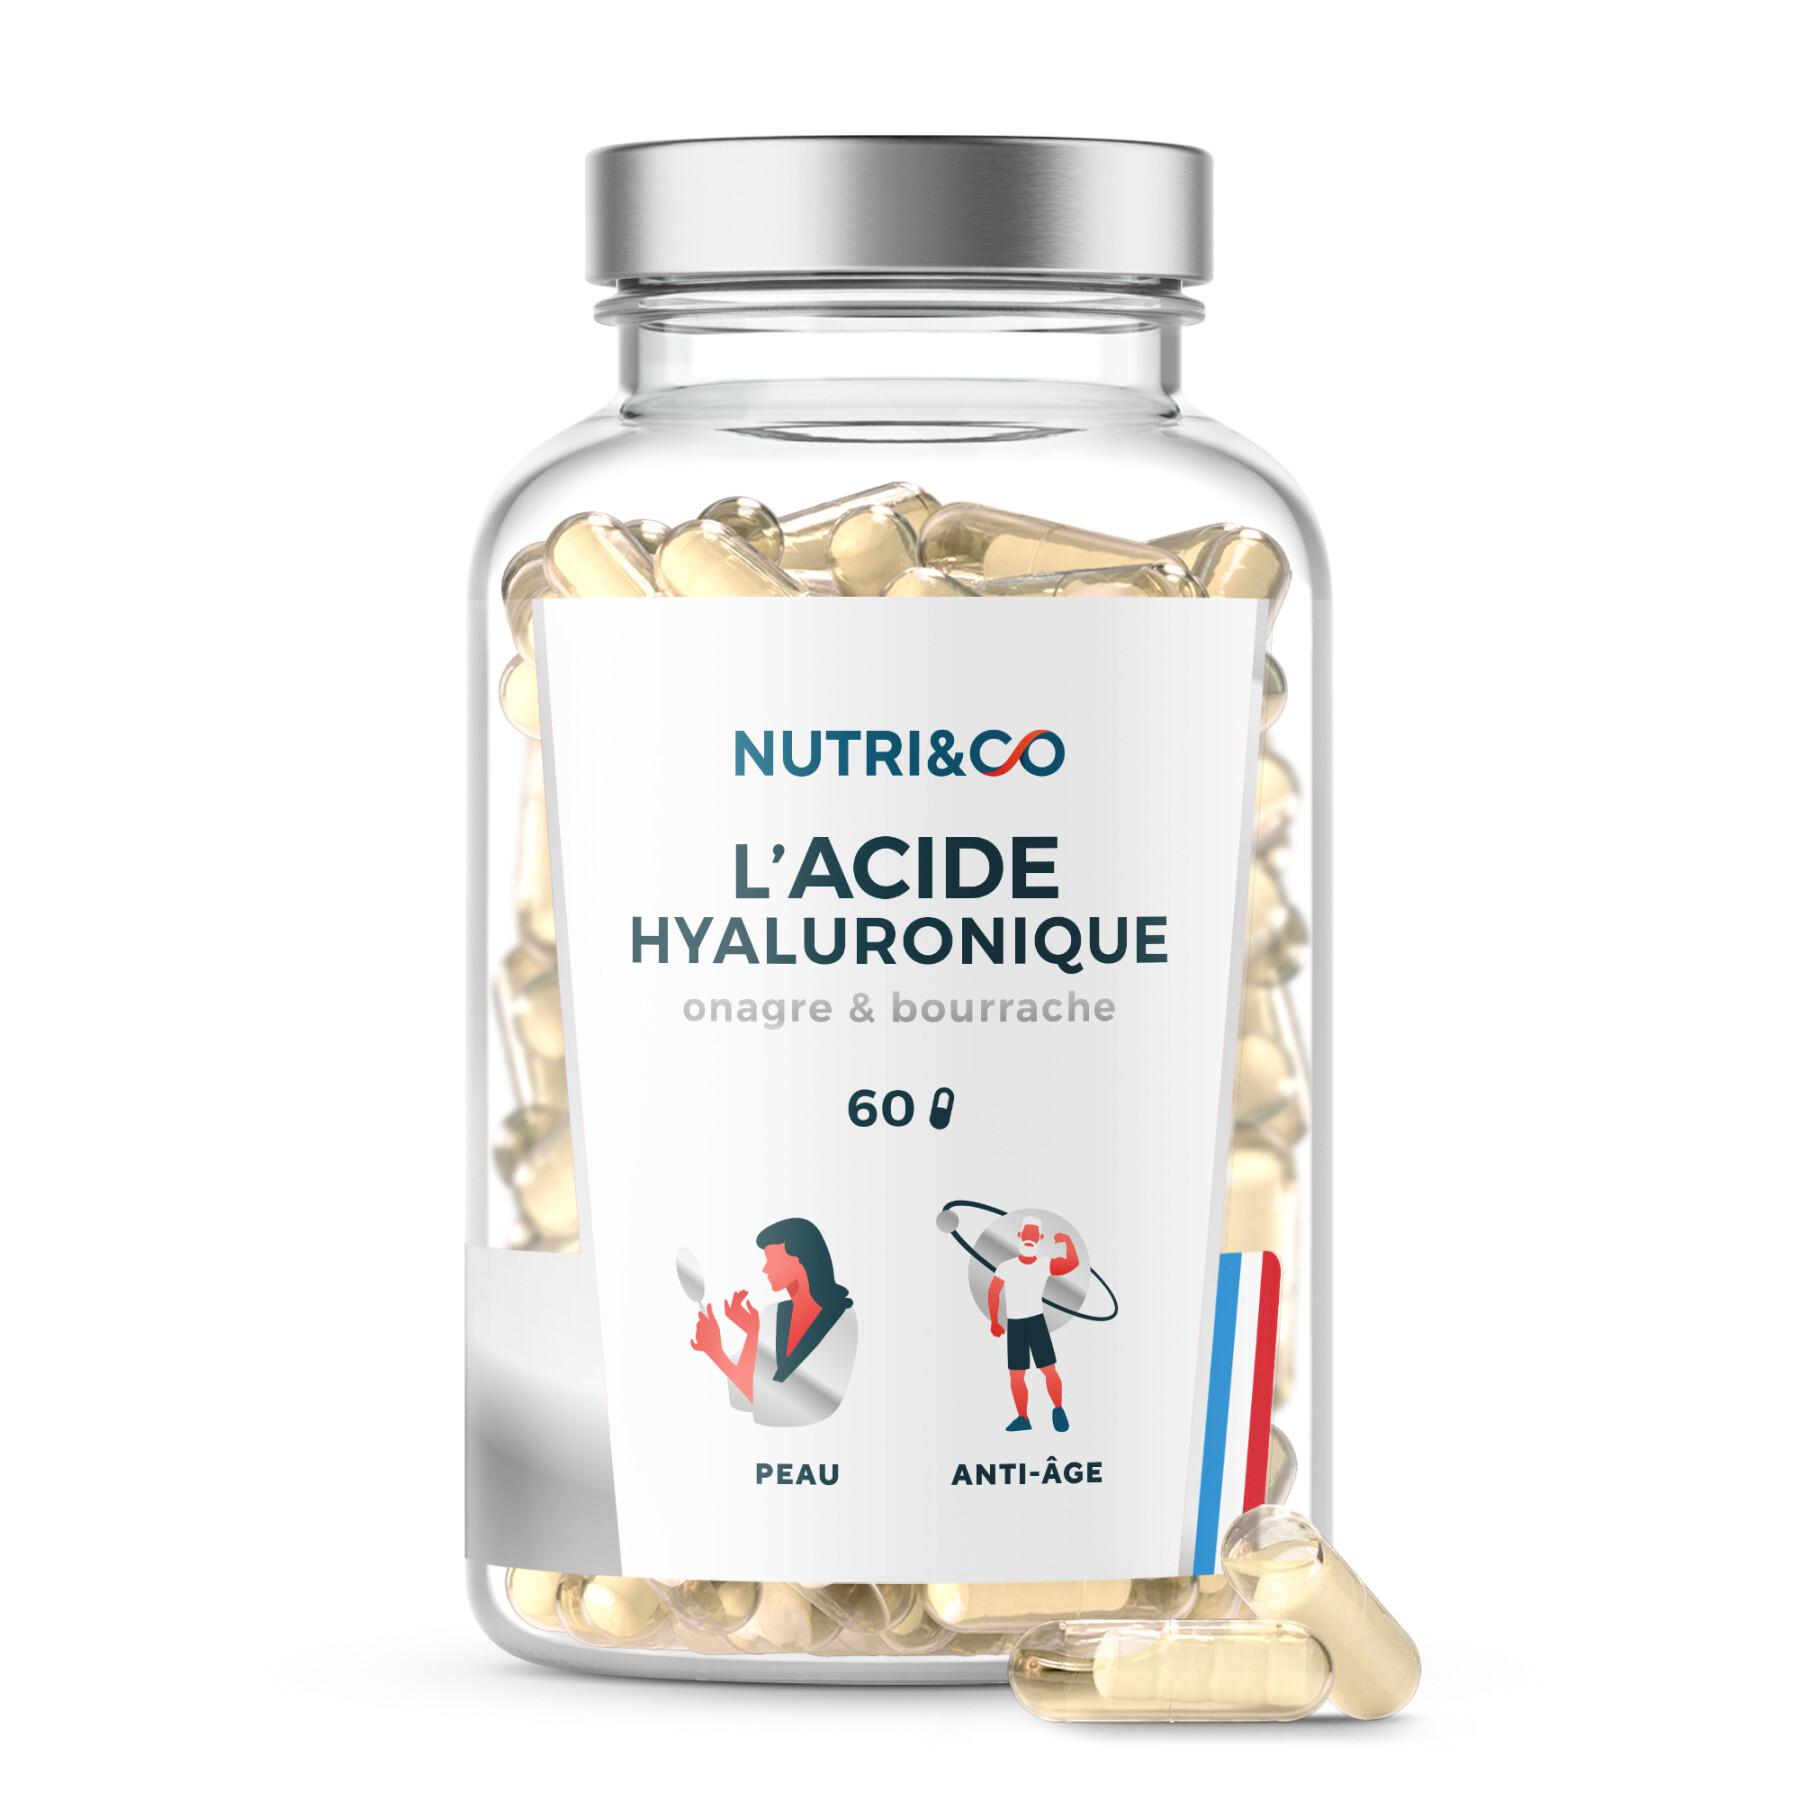 60 capsules of hyaluronic acid evening primrose + borage skin & anti-aging Nutri&Co